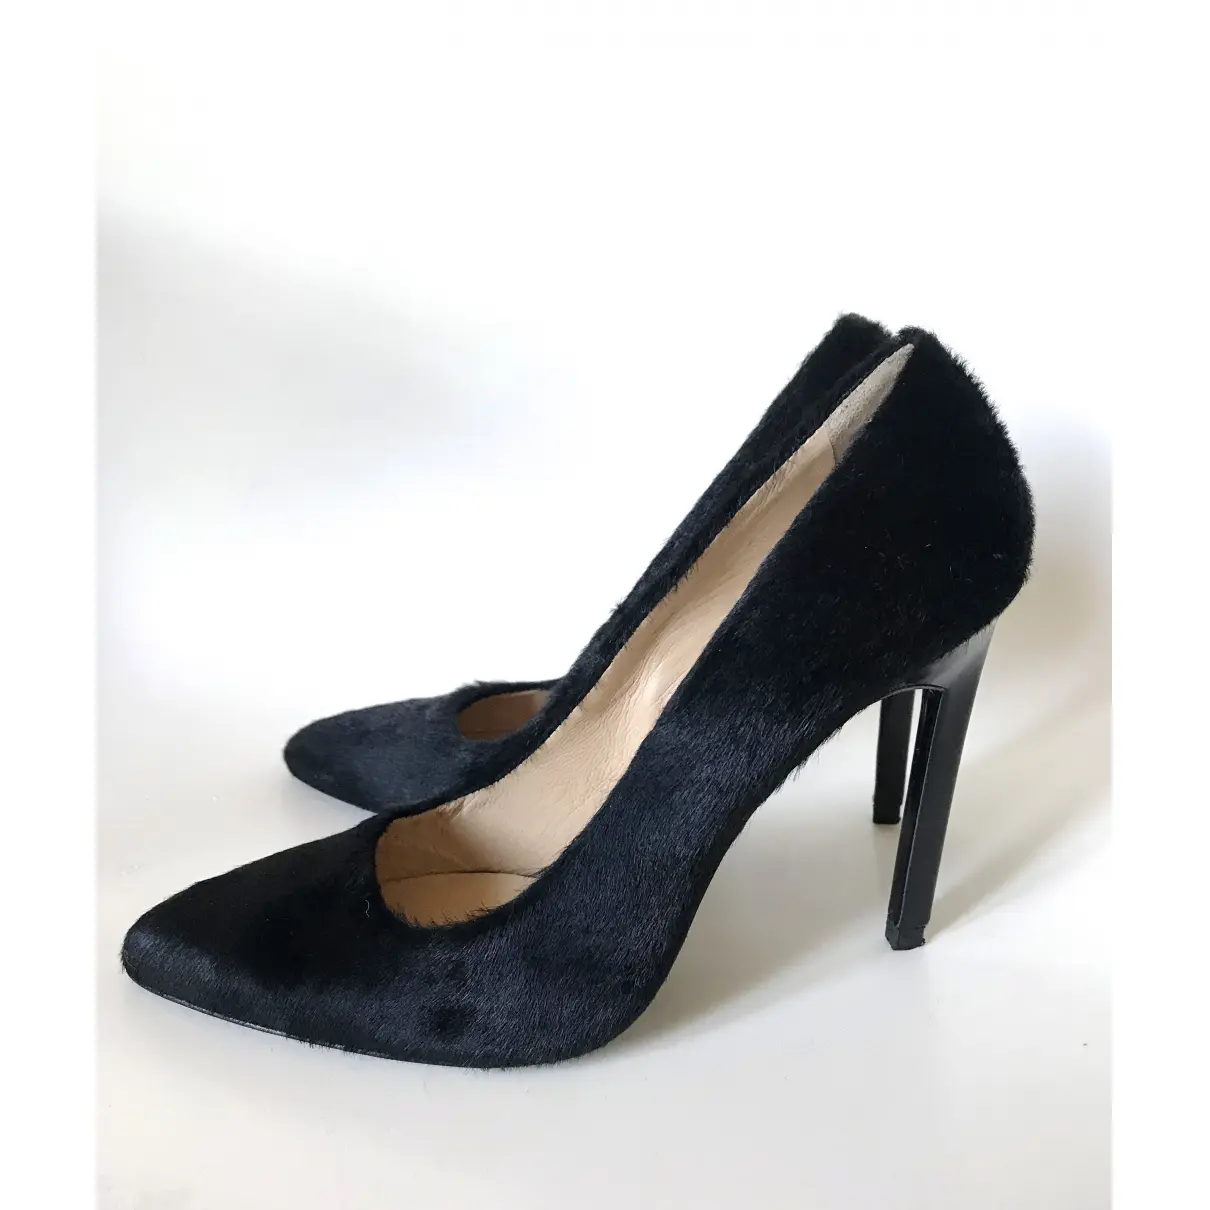 Buy Tara Jarmon Pony-style calfskin heels online